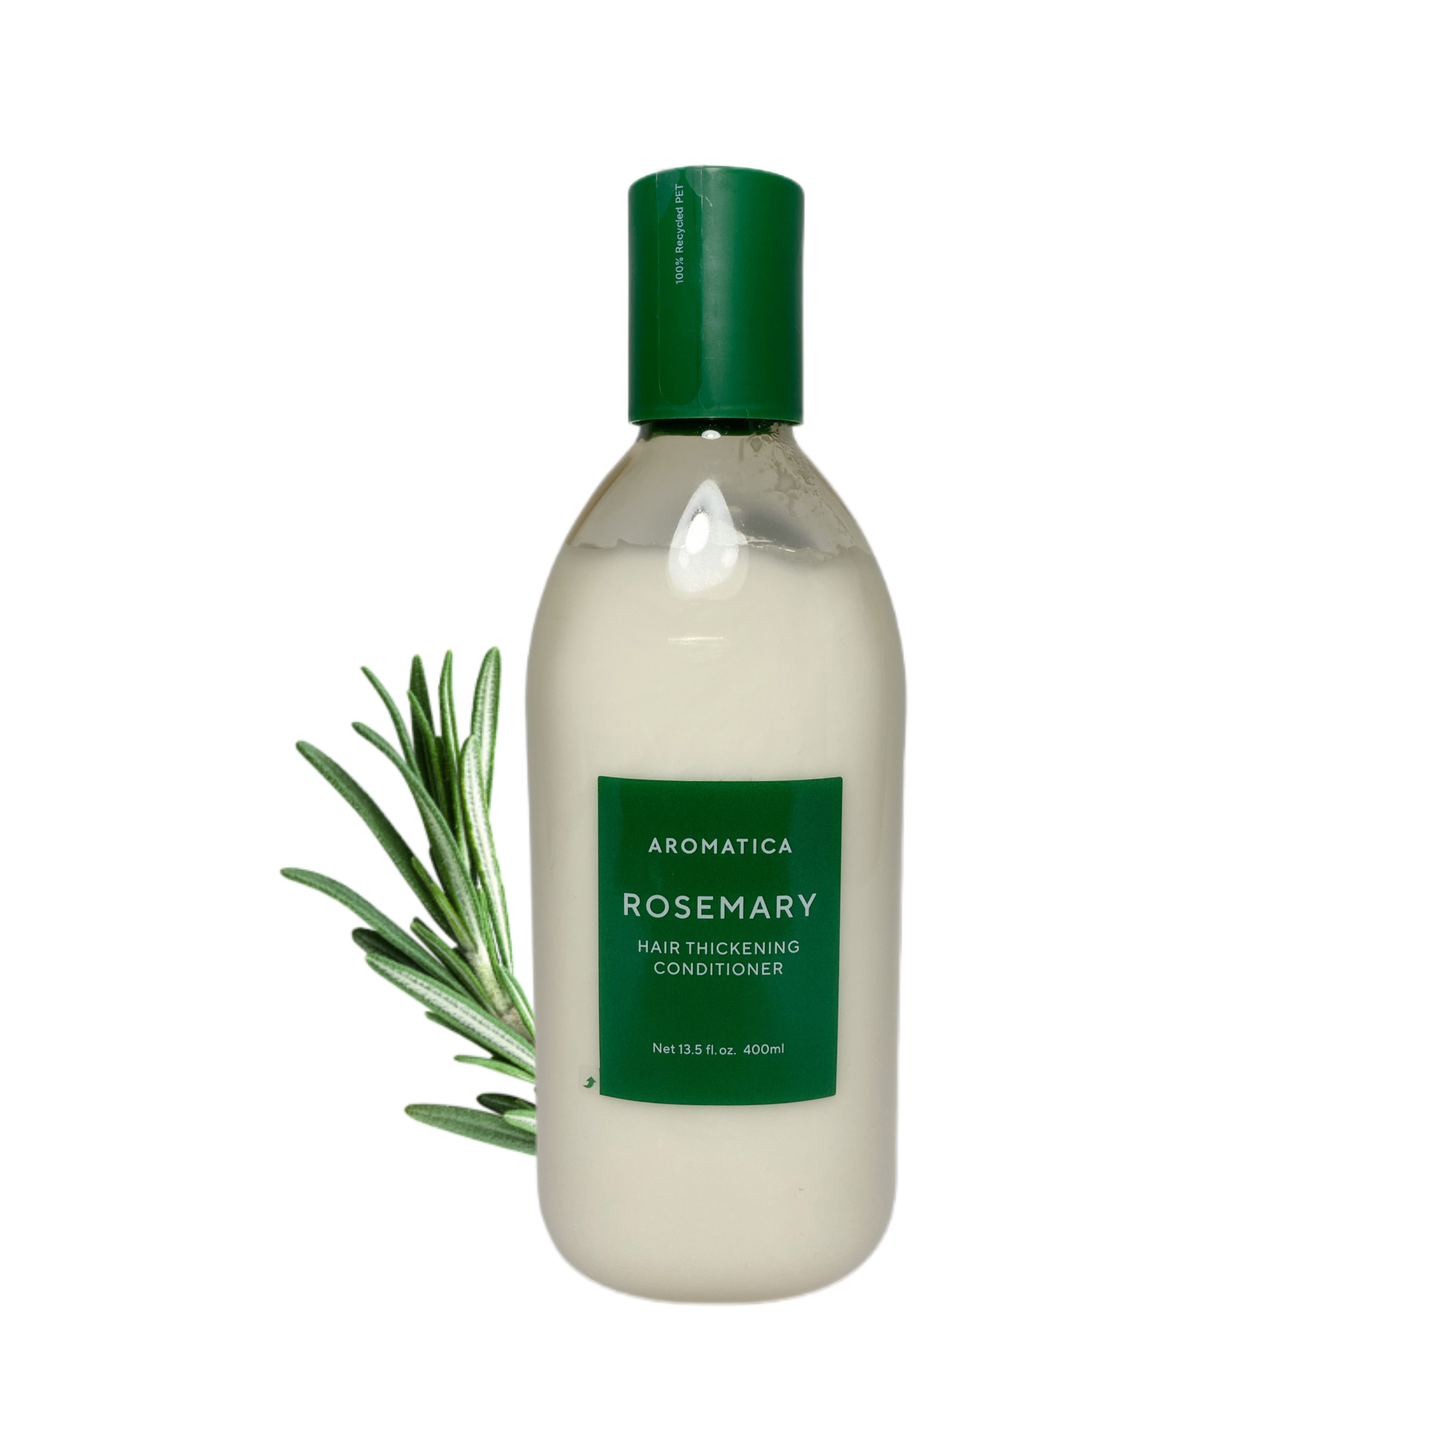 Aromatica Rosemary Hair Thickening Conditioner - 400ml